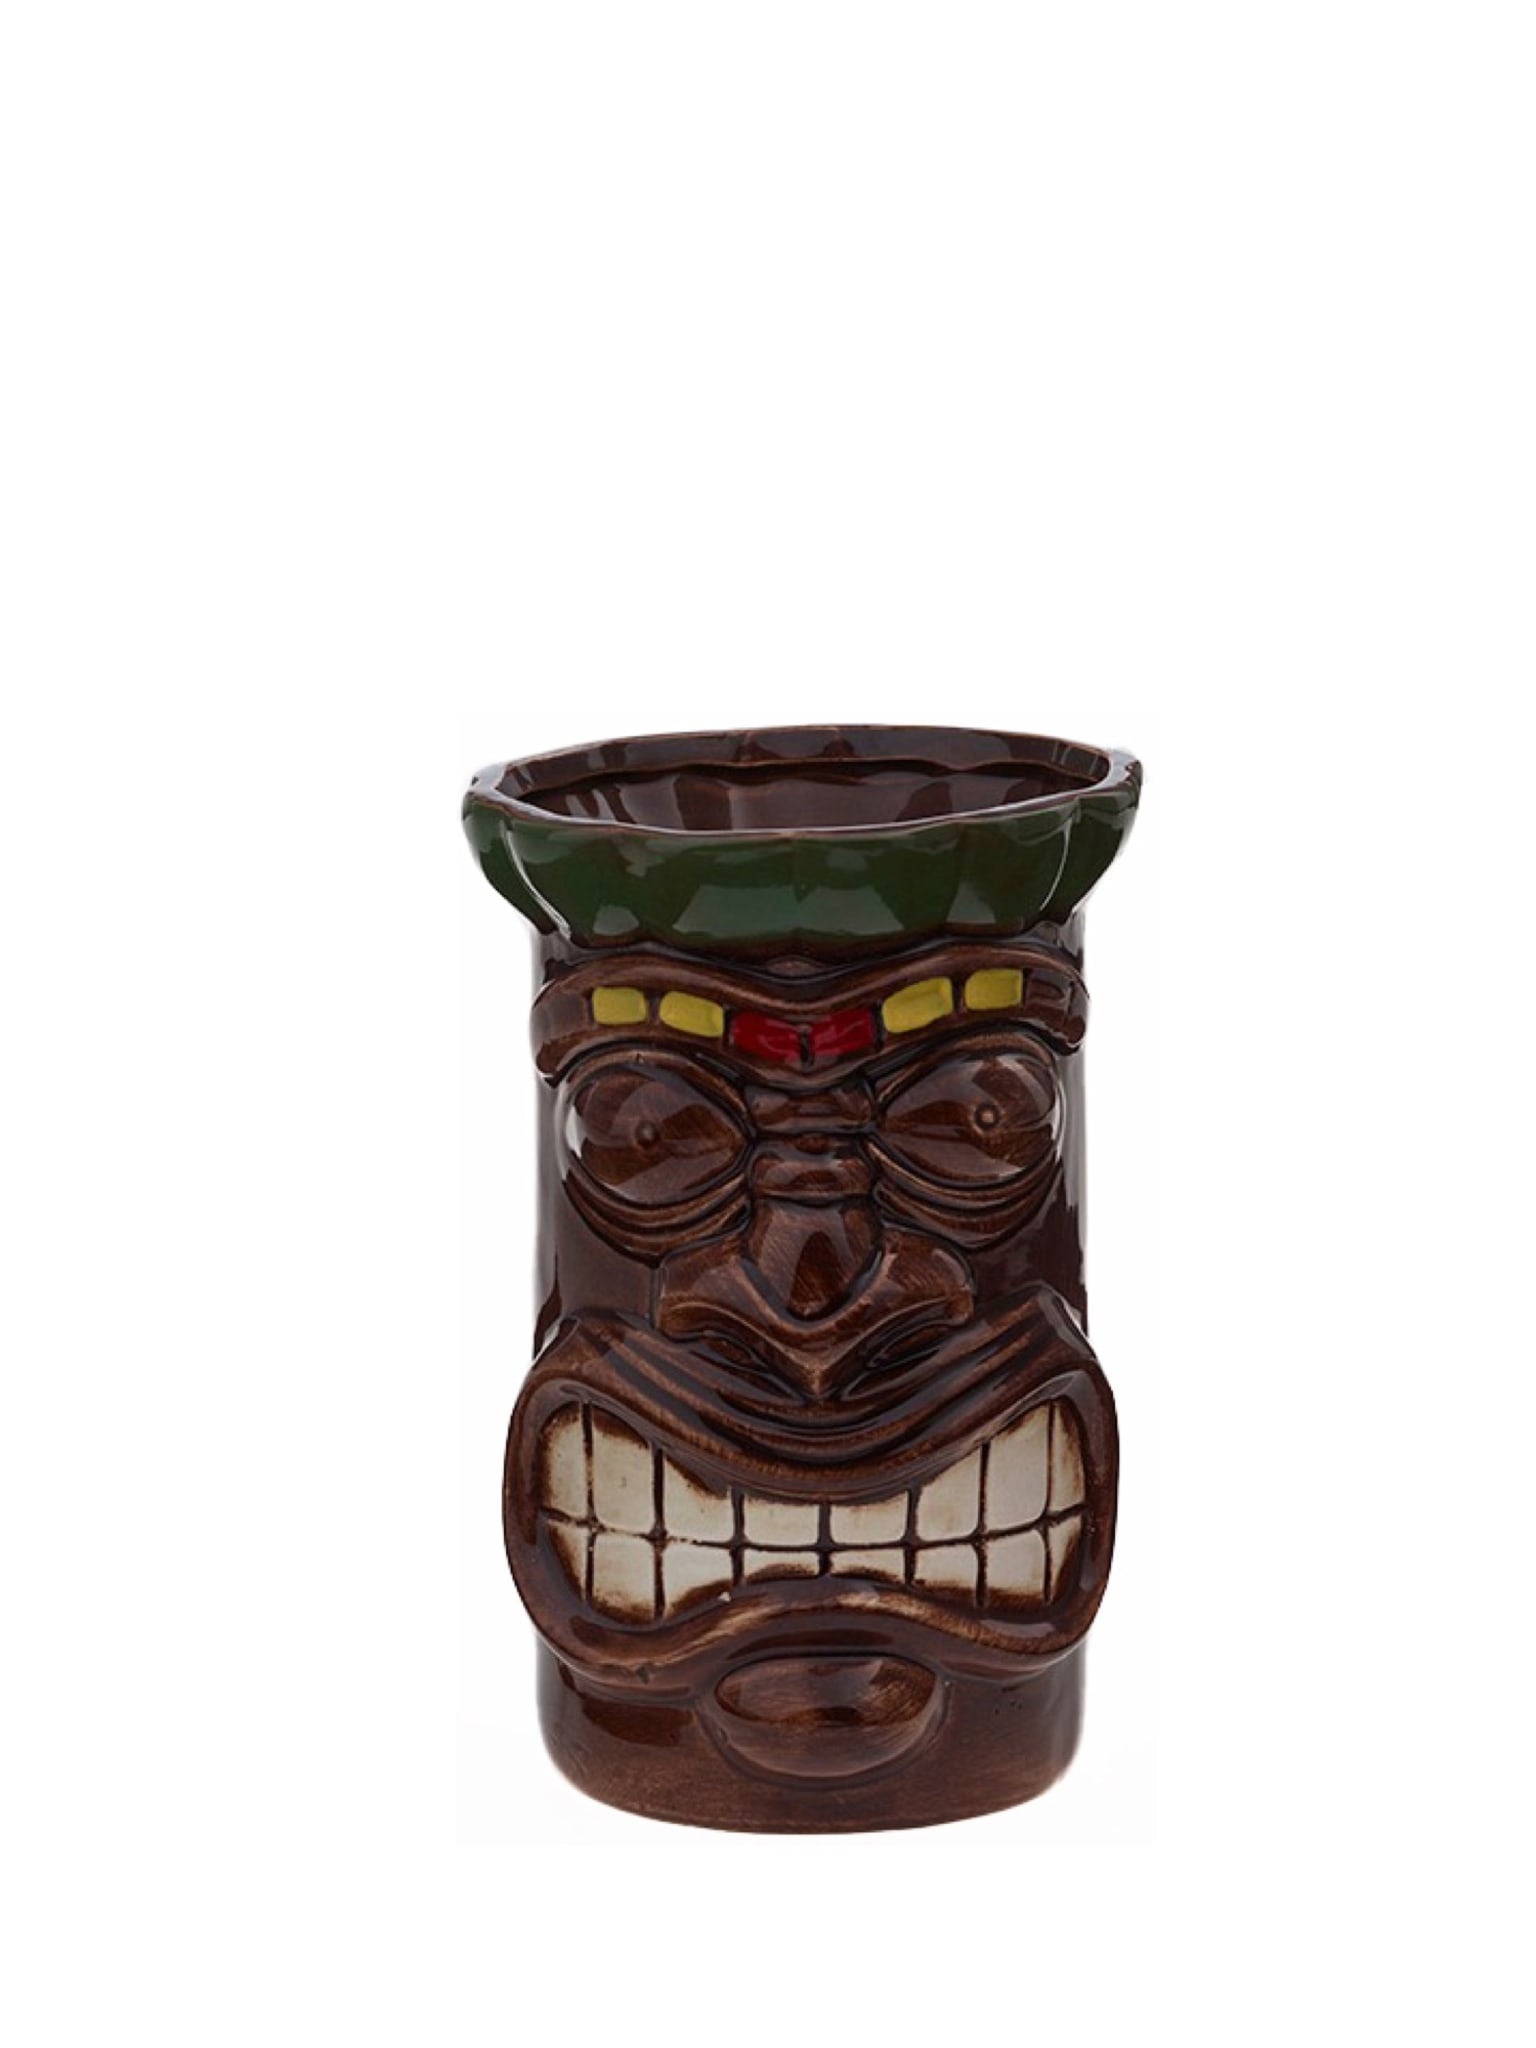 Make your drinks an experience with this unique and fun Tiki mug shaped like a Marikoriko